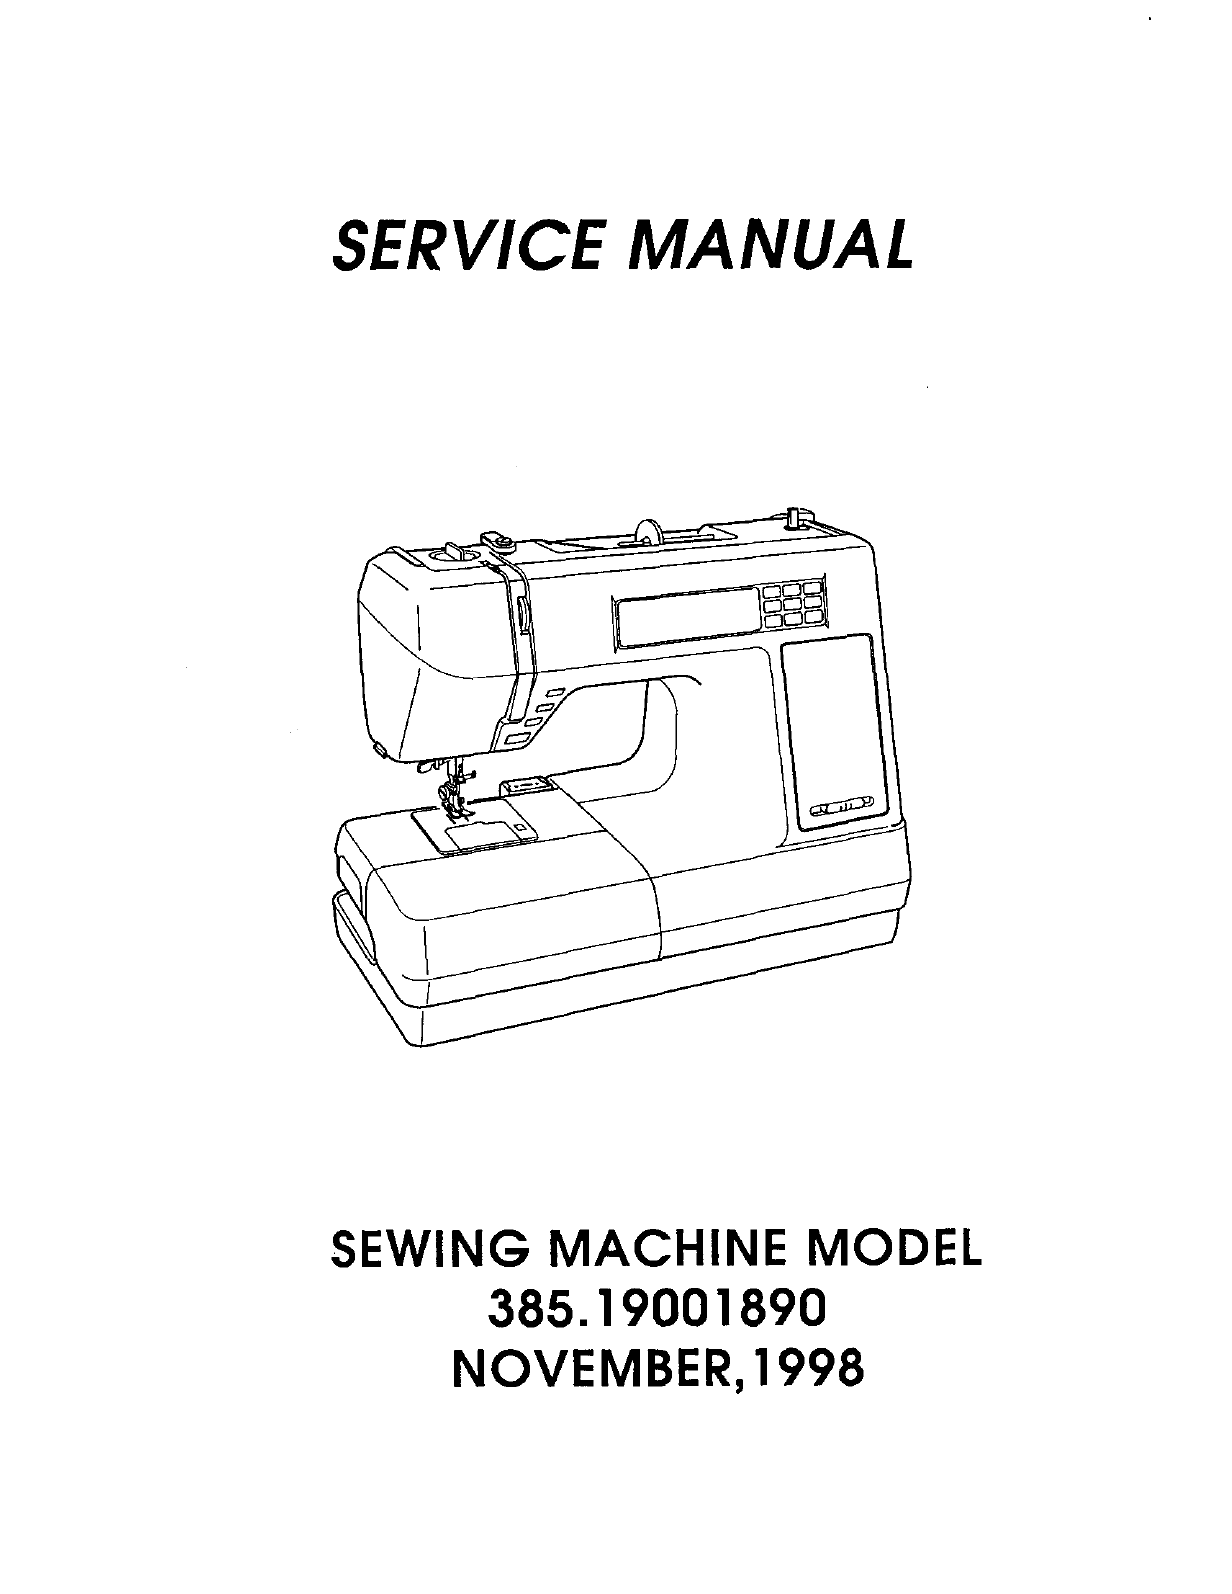 Sewing Machine two in one инструкция